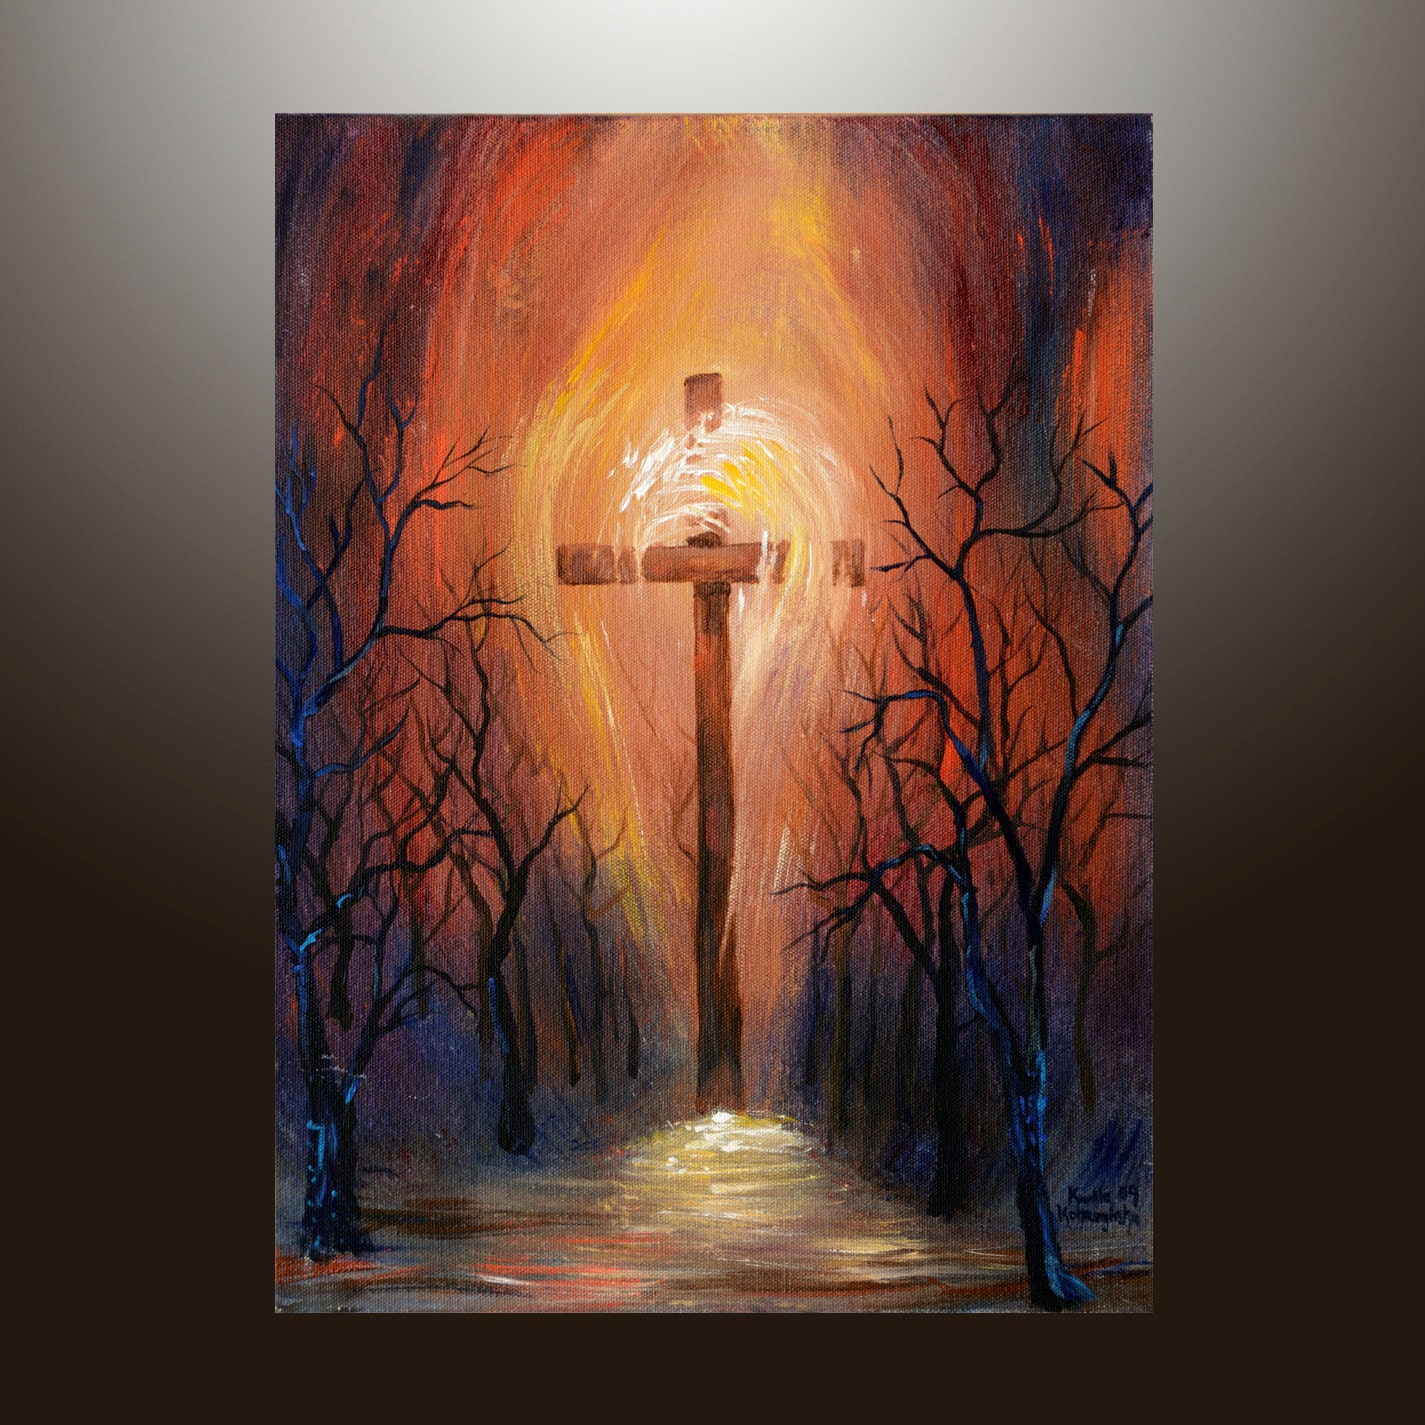  Cross Painting